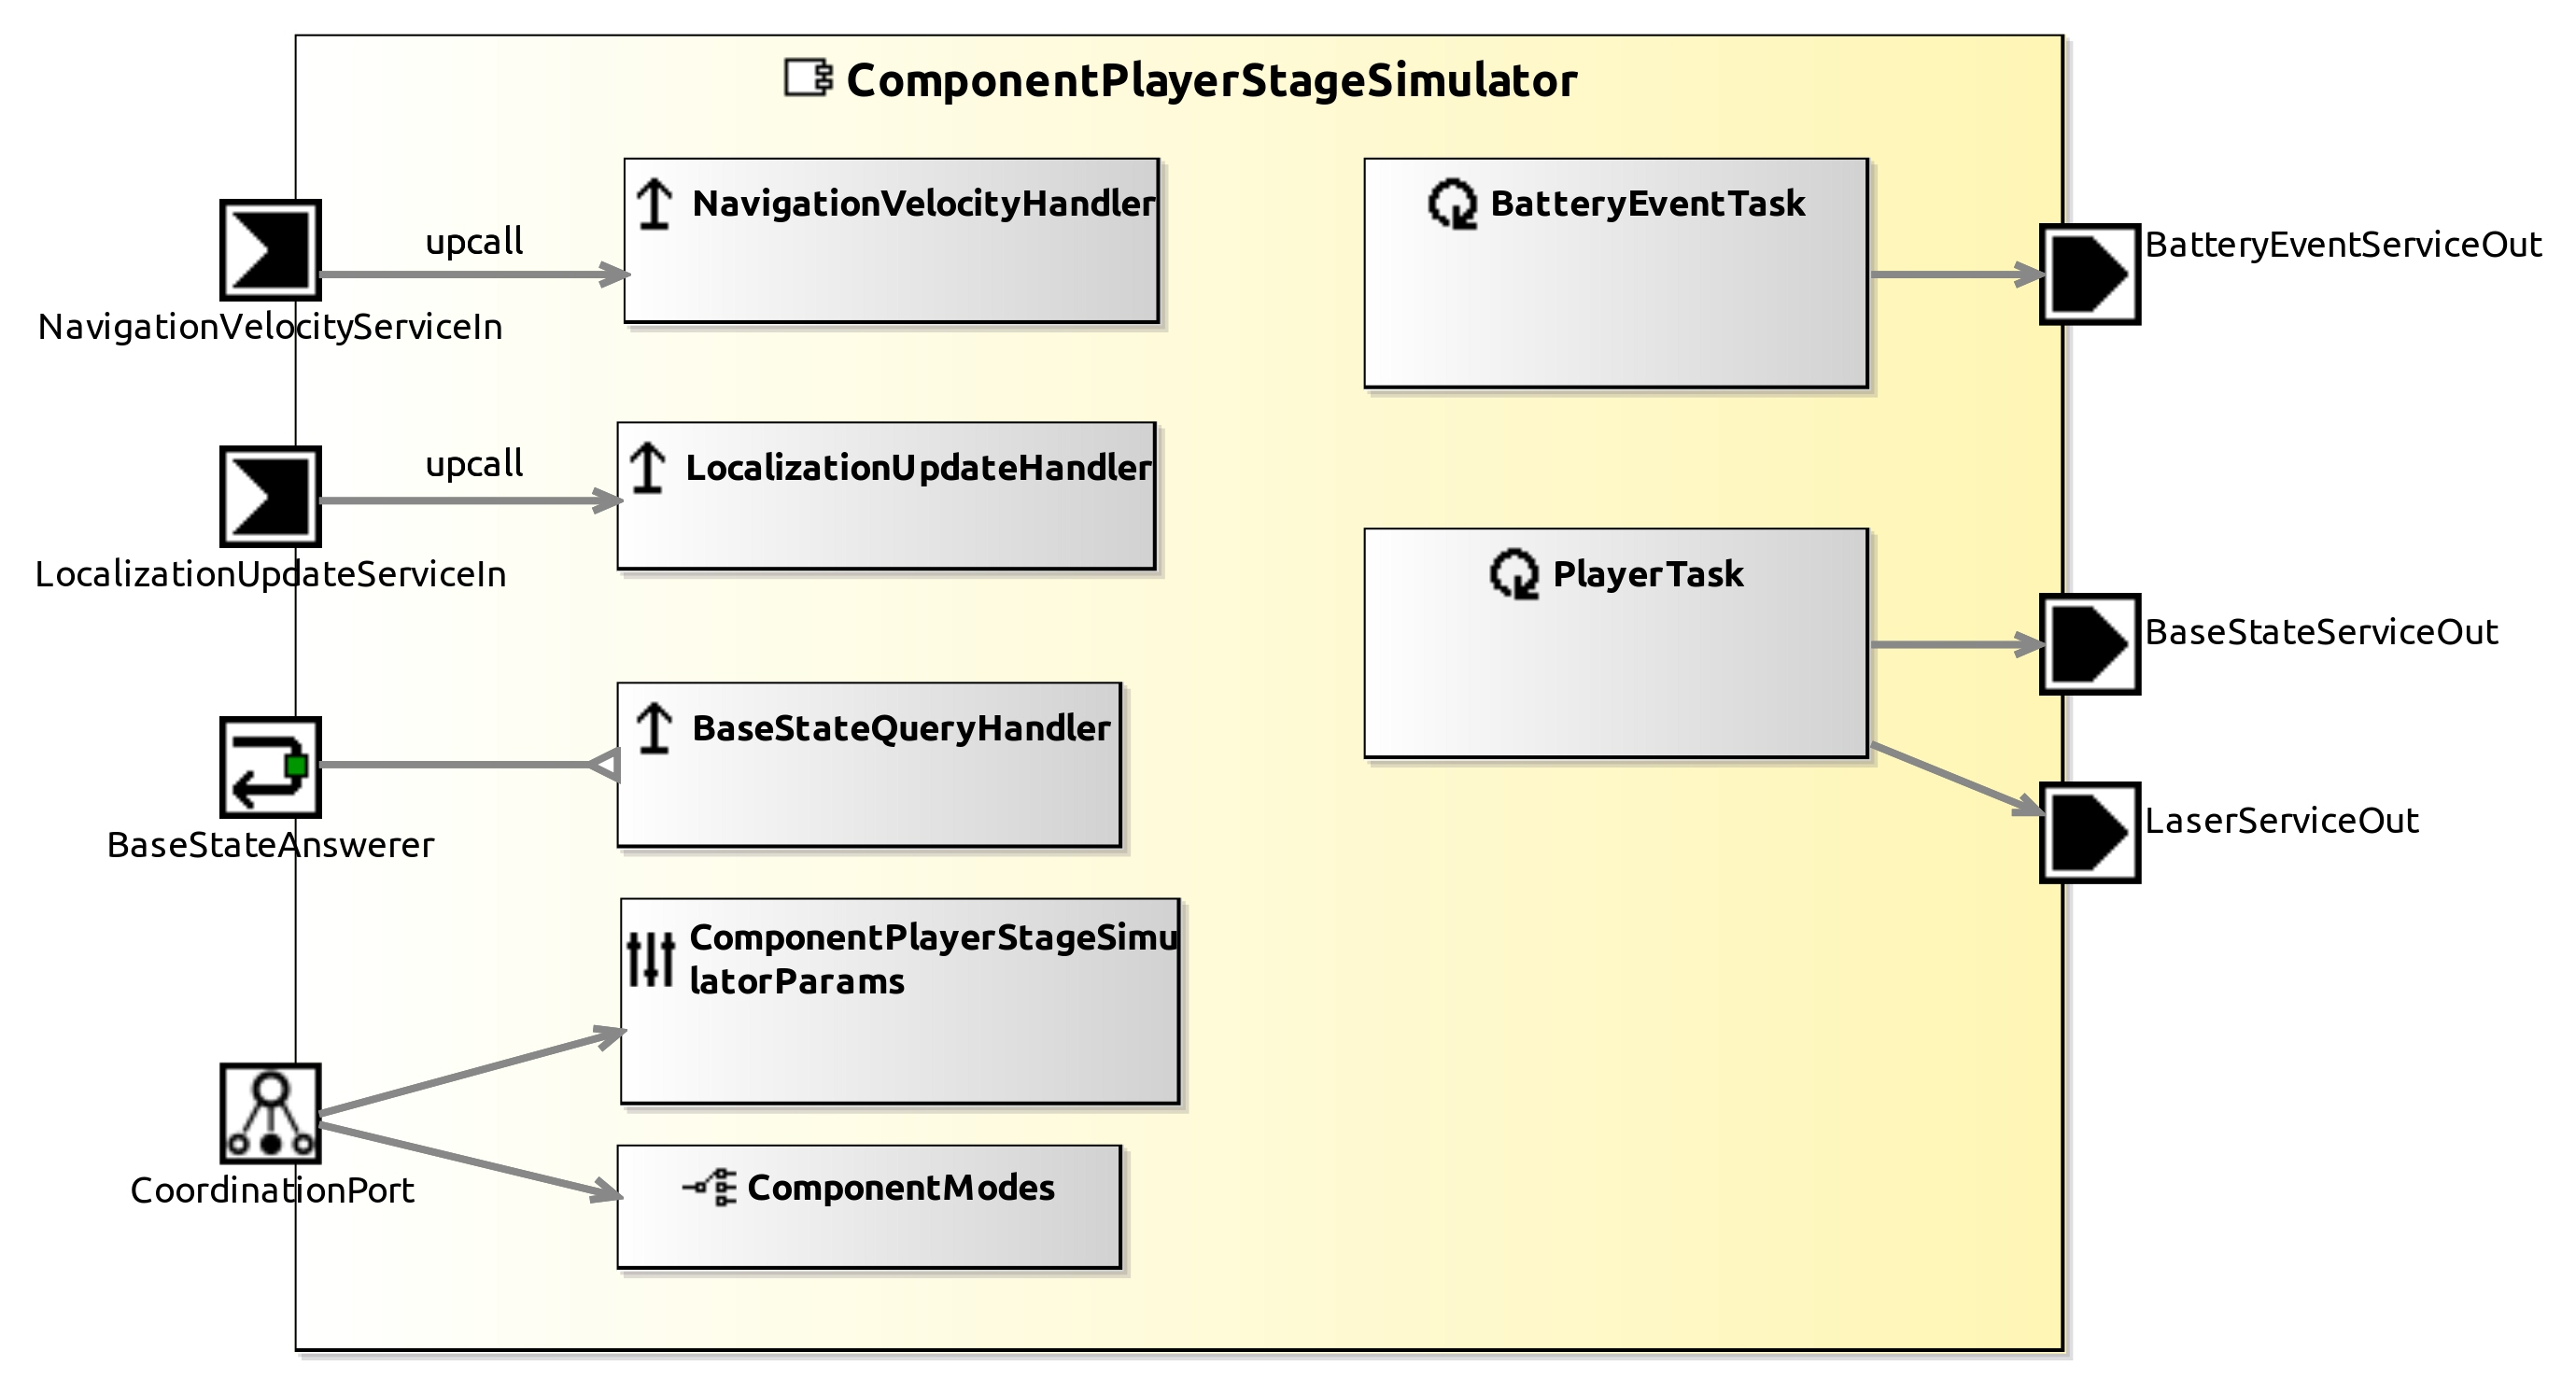 raw.githubusercontent.com_servicerobotics-ulm_componentrepository_master_componentplayerstagesimulator_model_componentplayerstagesimulatorcomponentdefinition.jpg